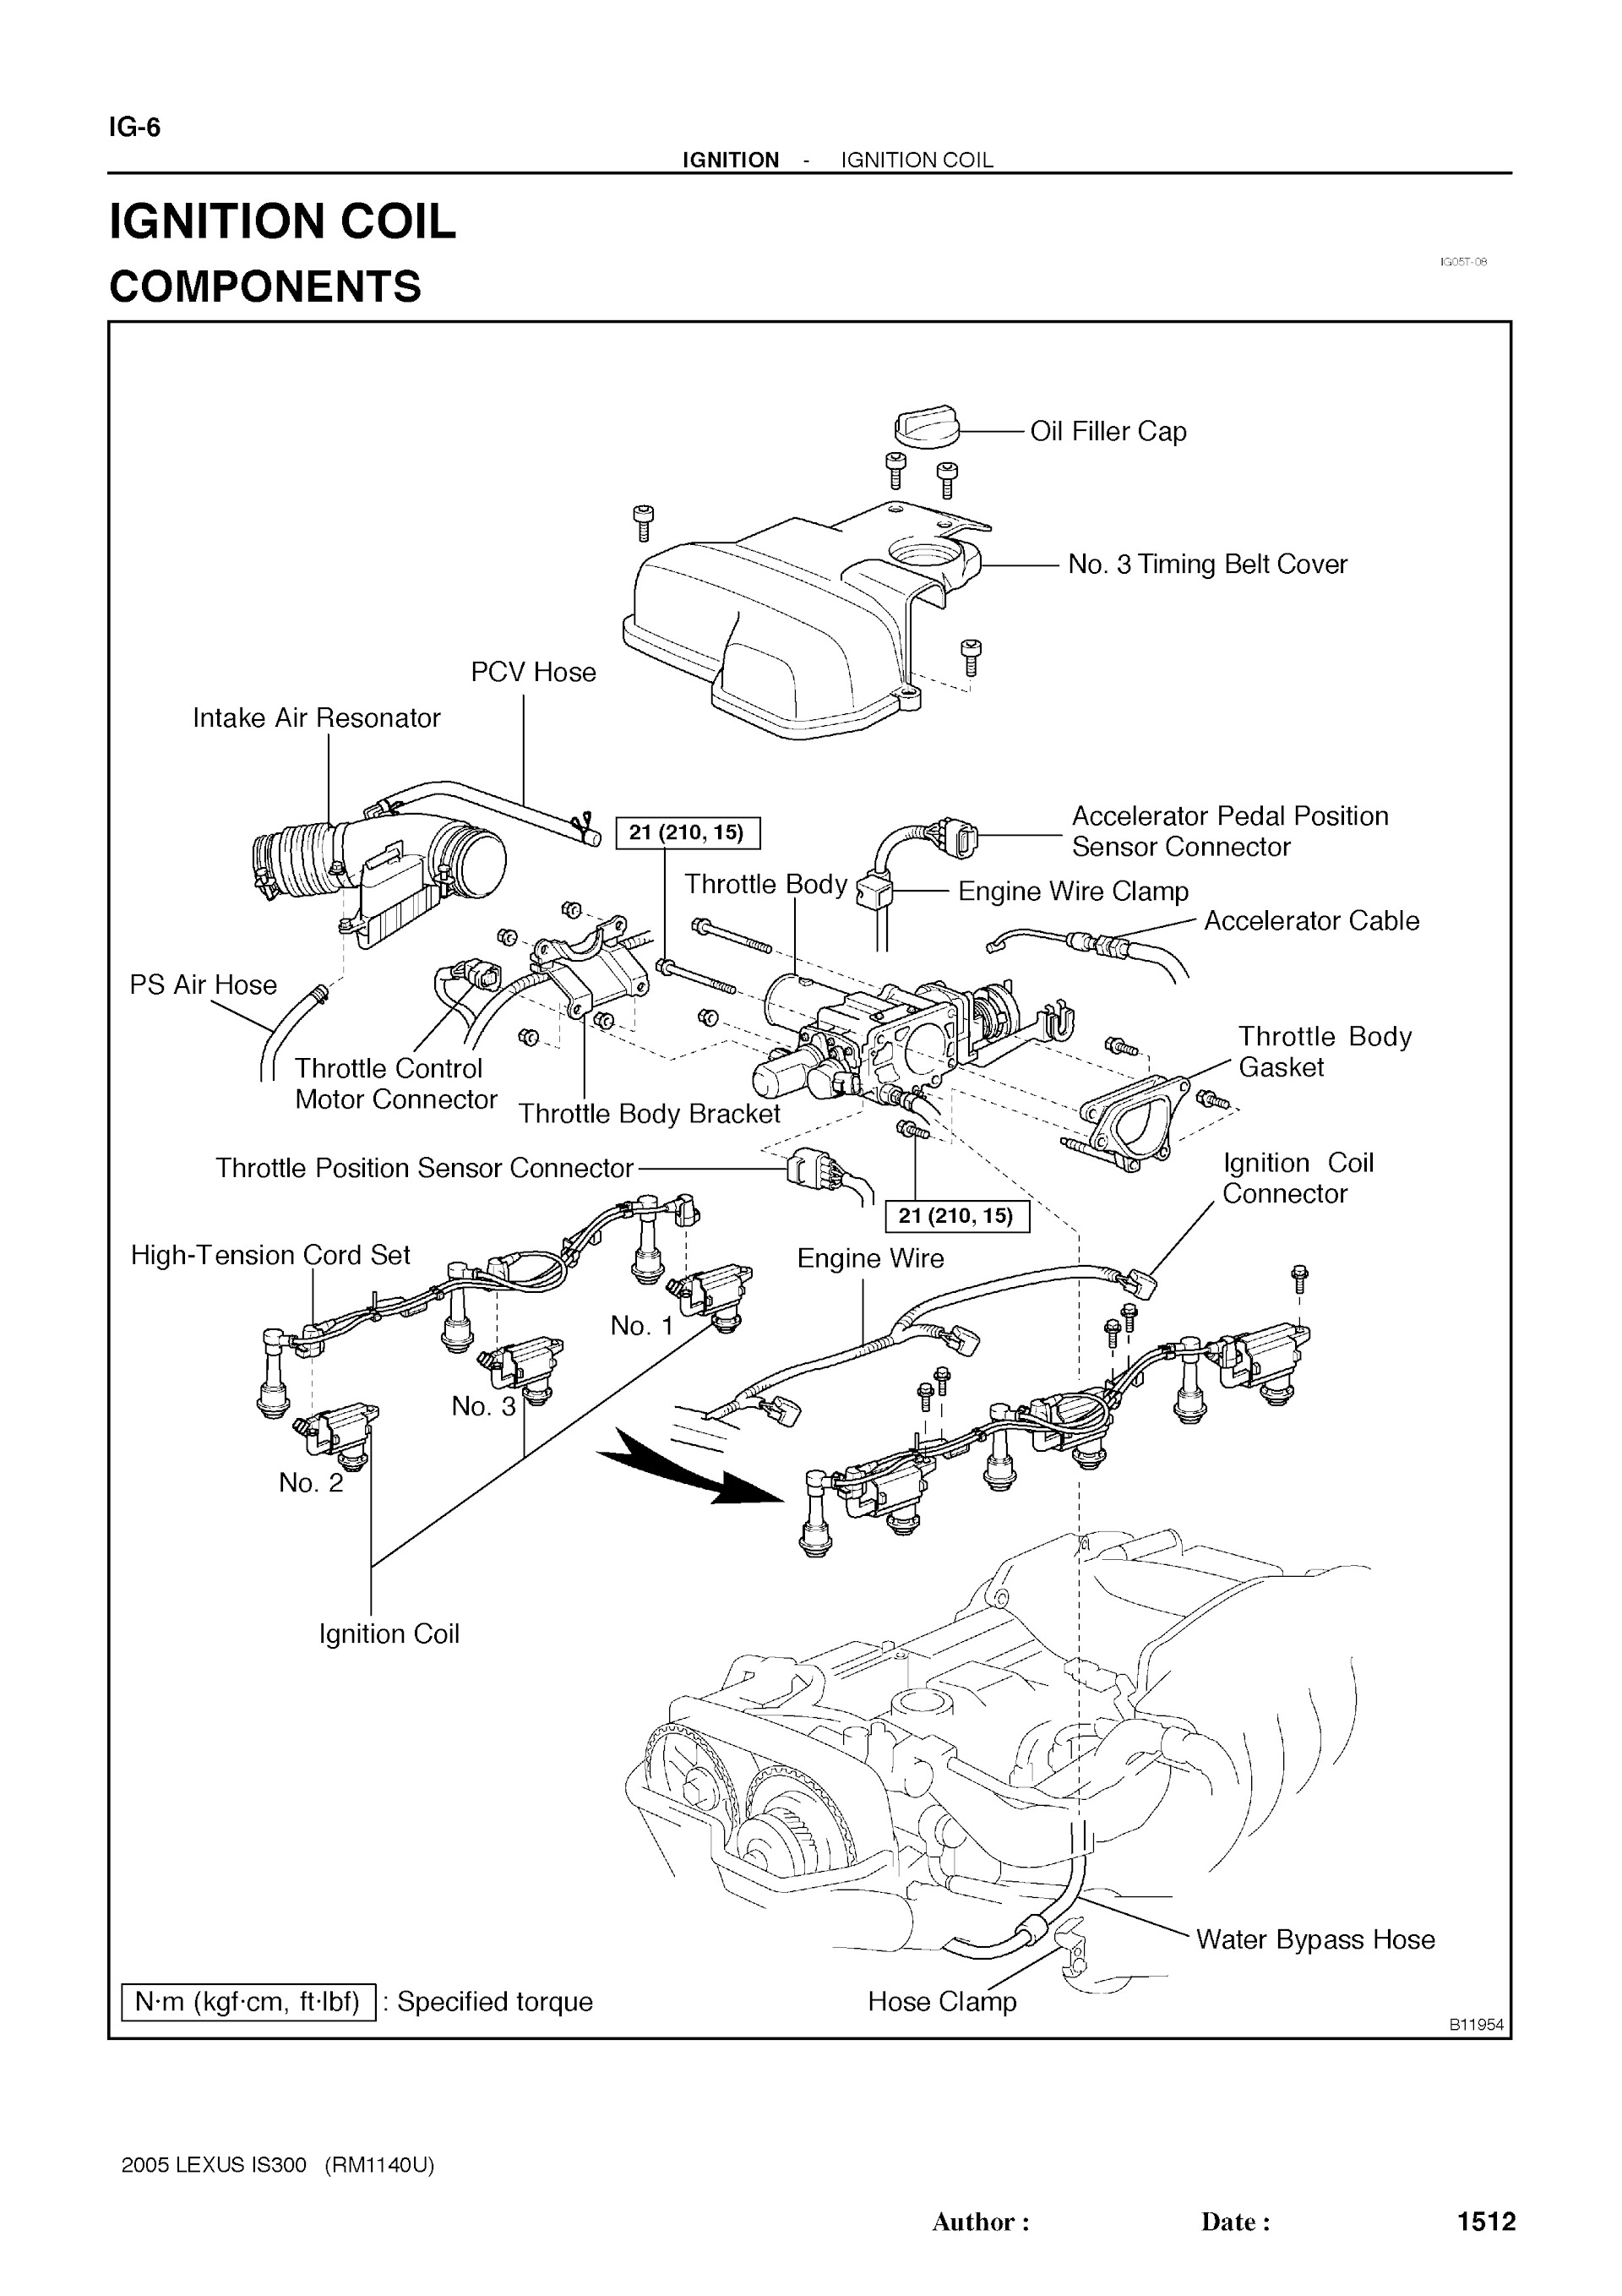 2005 Lexus IS300 Repair Manual Ignition Coil